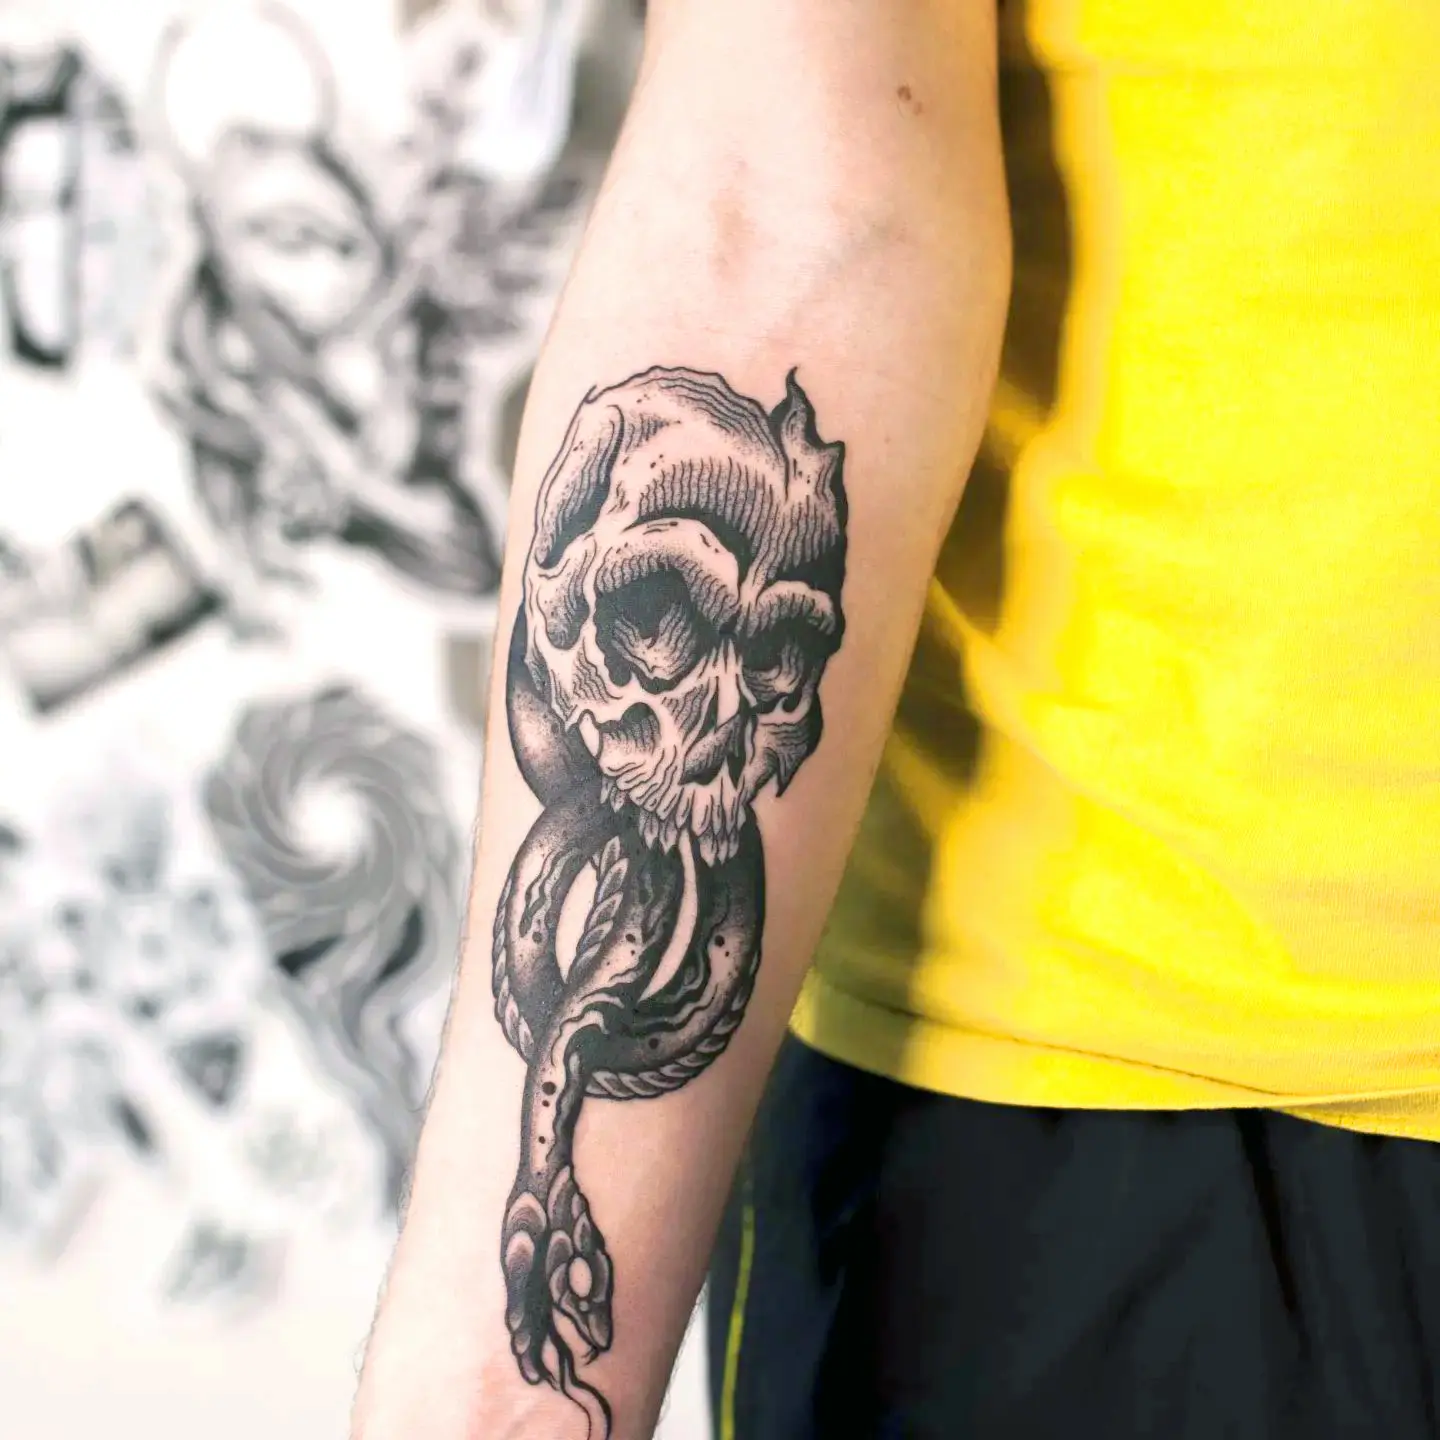 Tatuaje de calavera de mortífago con tinta negra